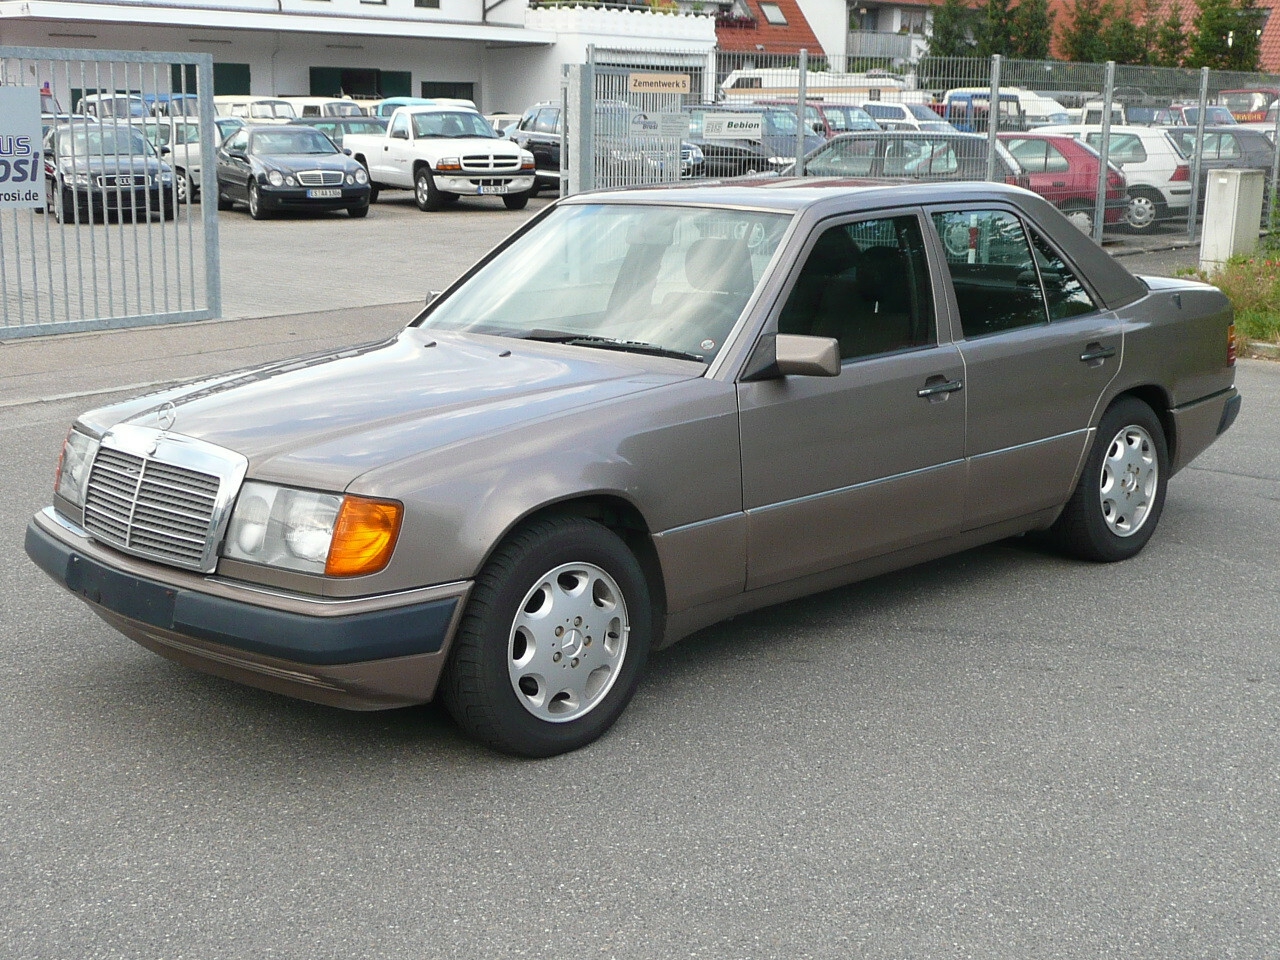 Mercedes-Benz 300